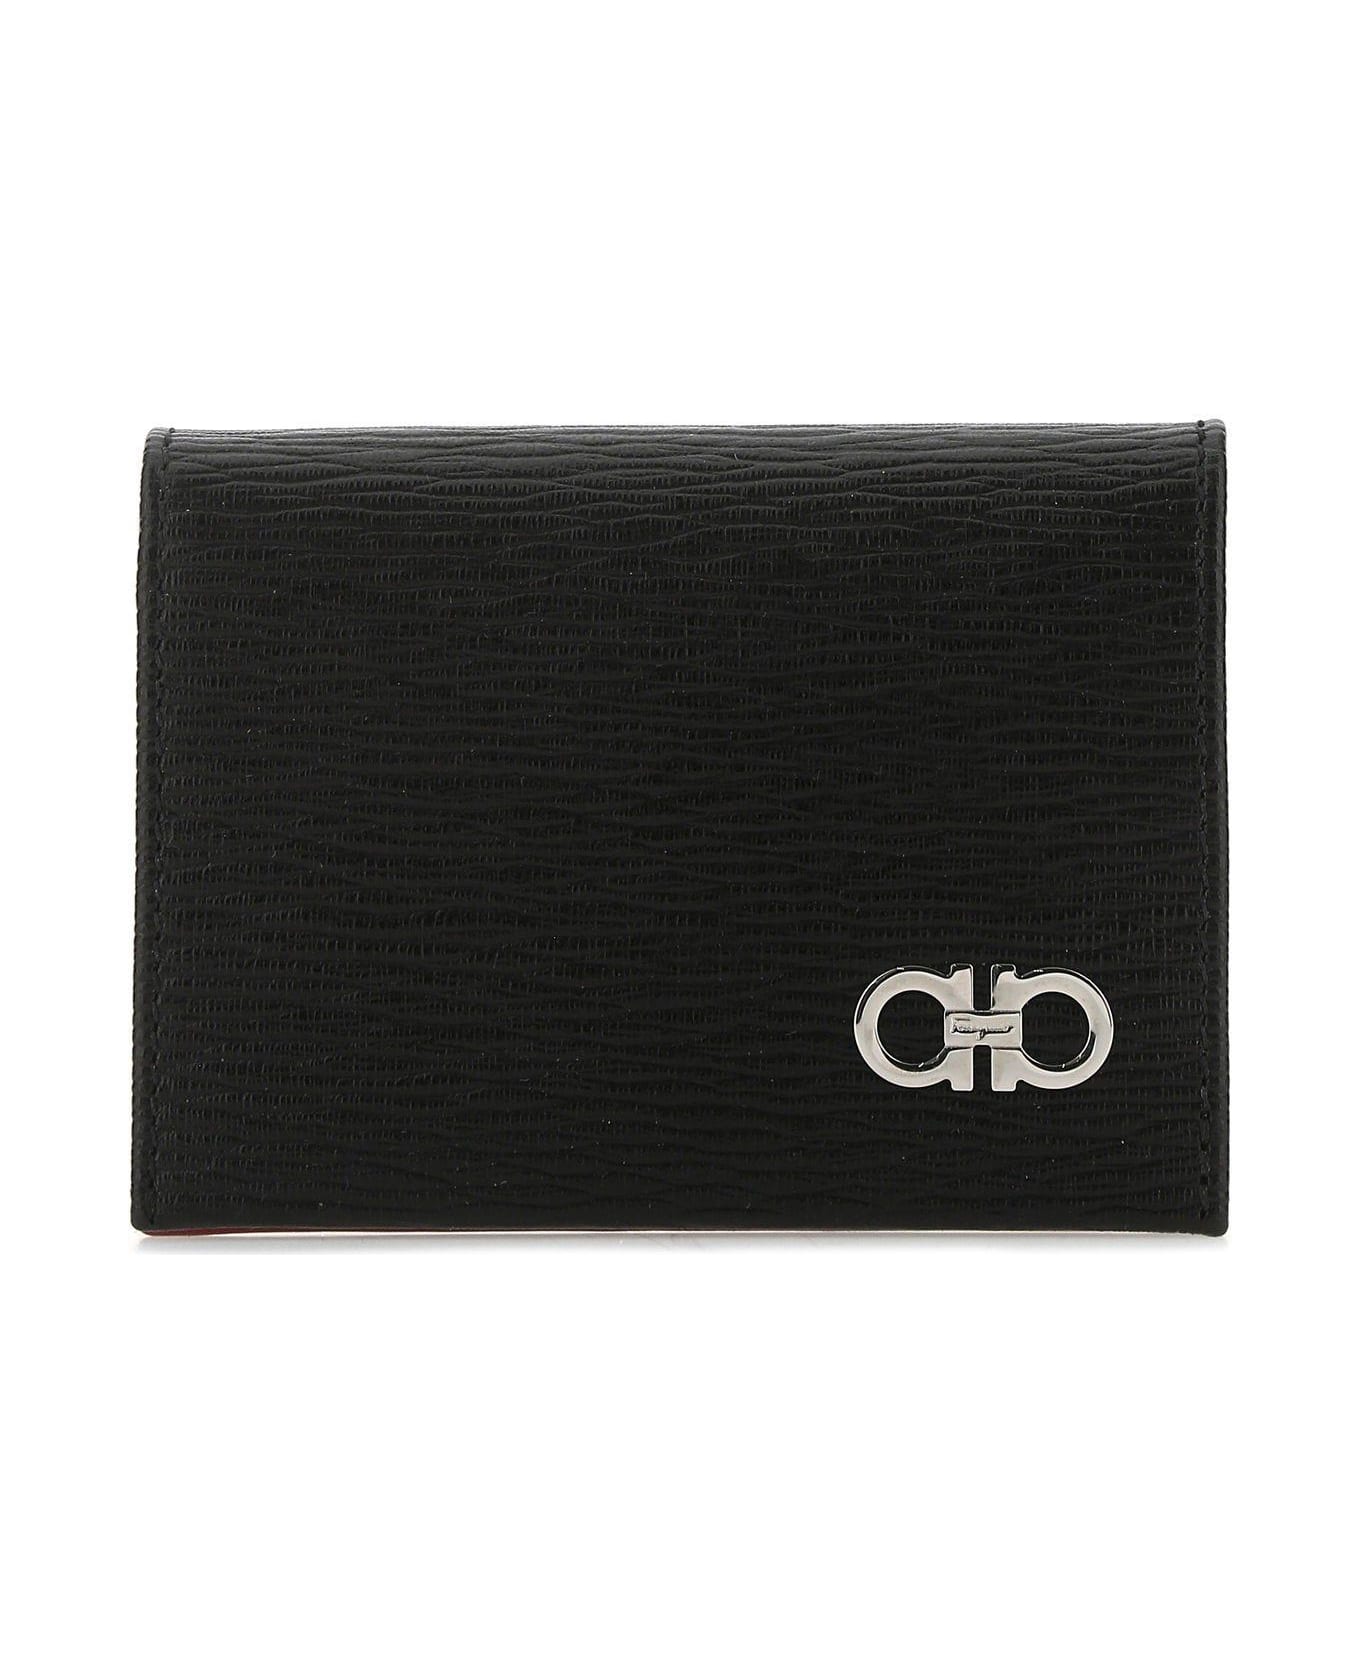 Ferragamo Black Leather Card Holder - BLACK